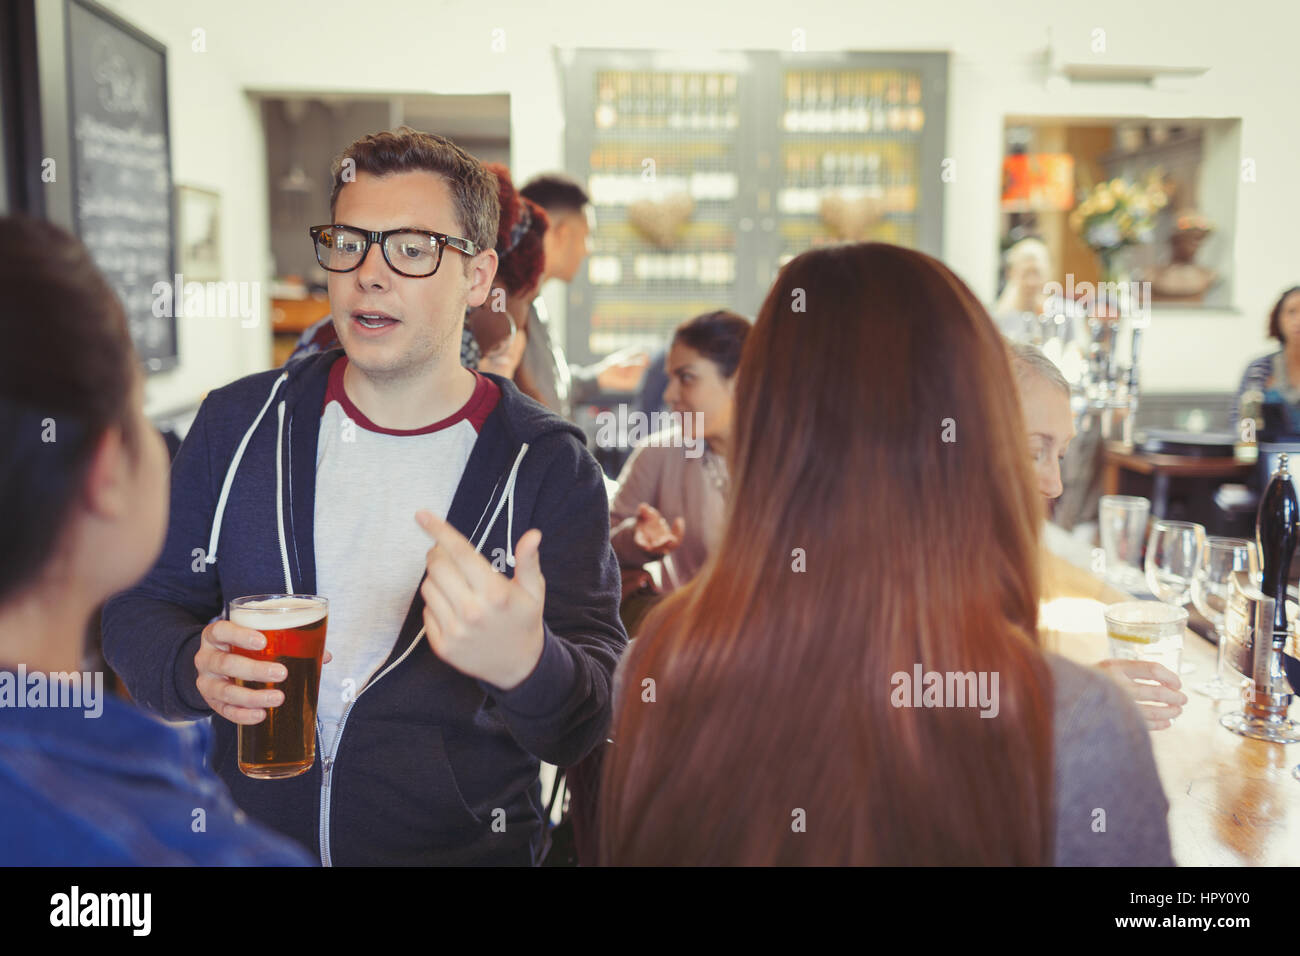 Man drinking beer and talking to woman at bar Stock Photo